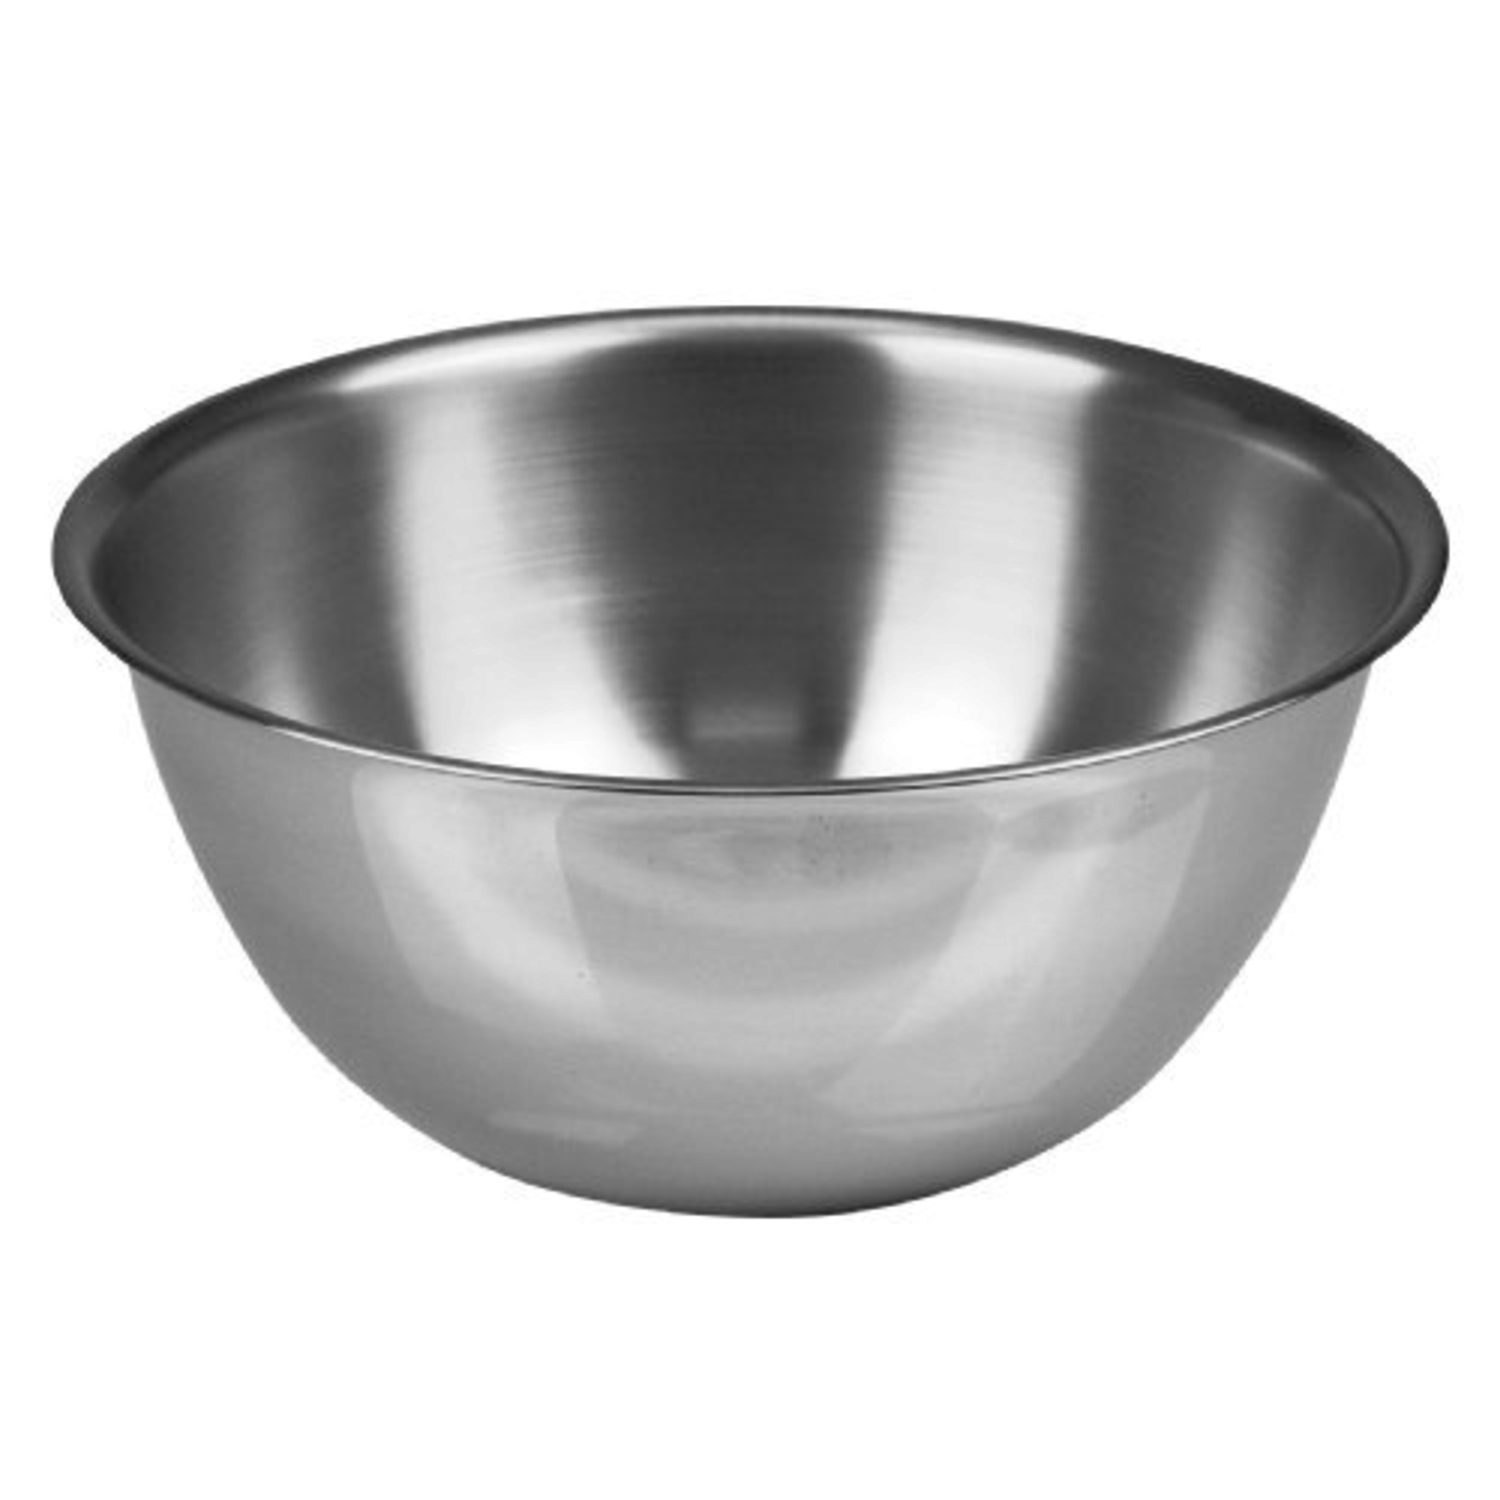 https://cdn.shoplightspeed.com/shops/633447/files/18295294/1500x4000x3/half-quart-stainless-steel-mixing-bowl.jpg